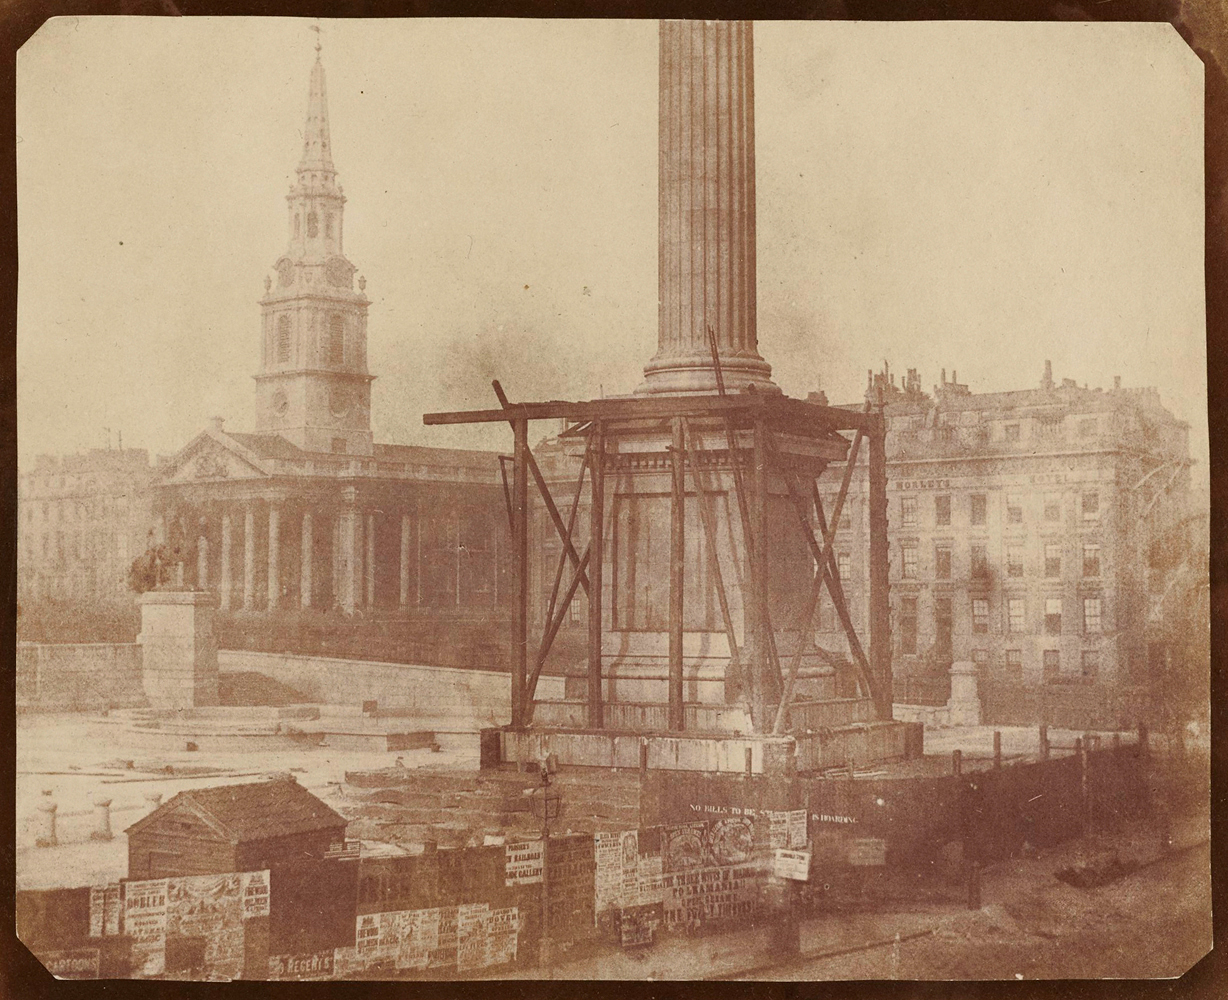 Nelson's Column under Construction in Trafalgar Square, London, April 1844